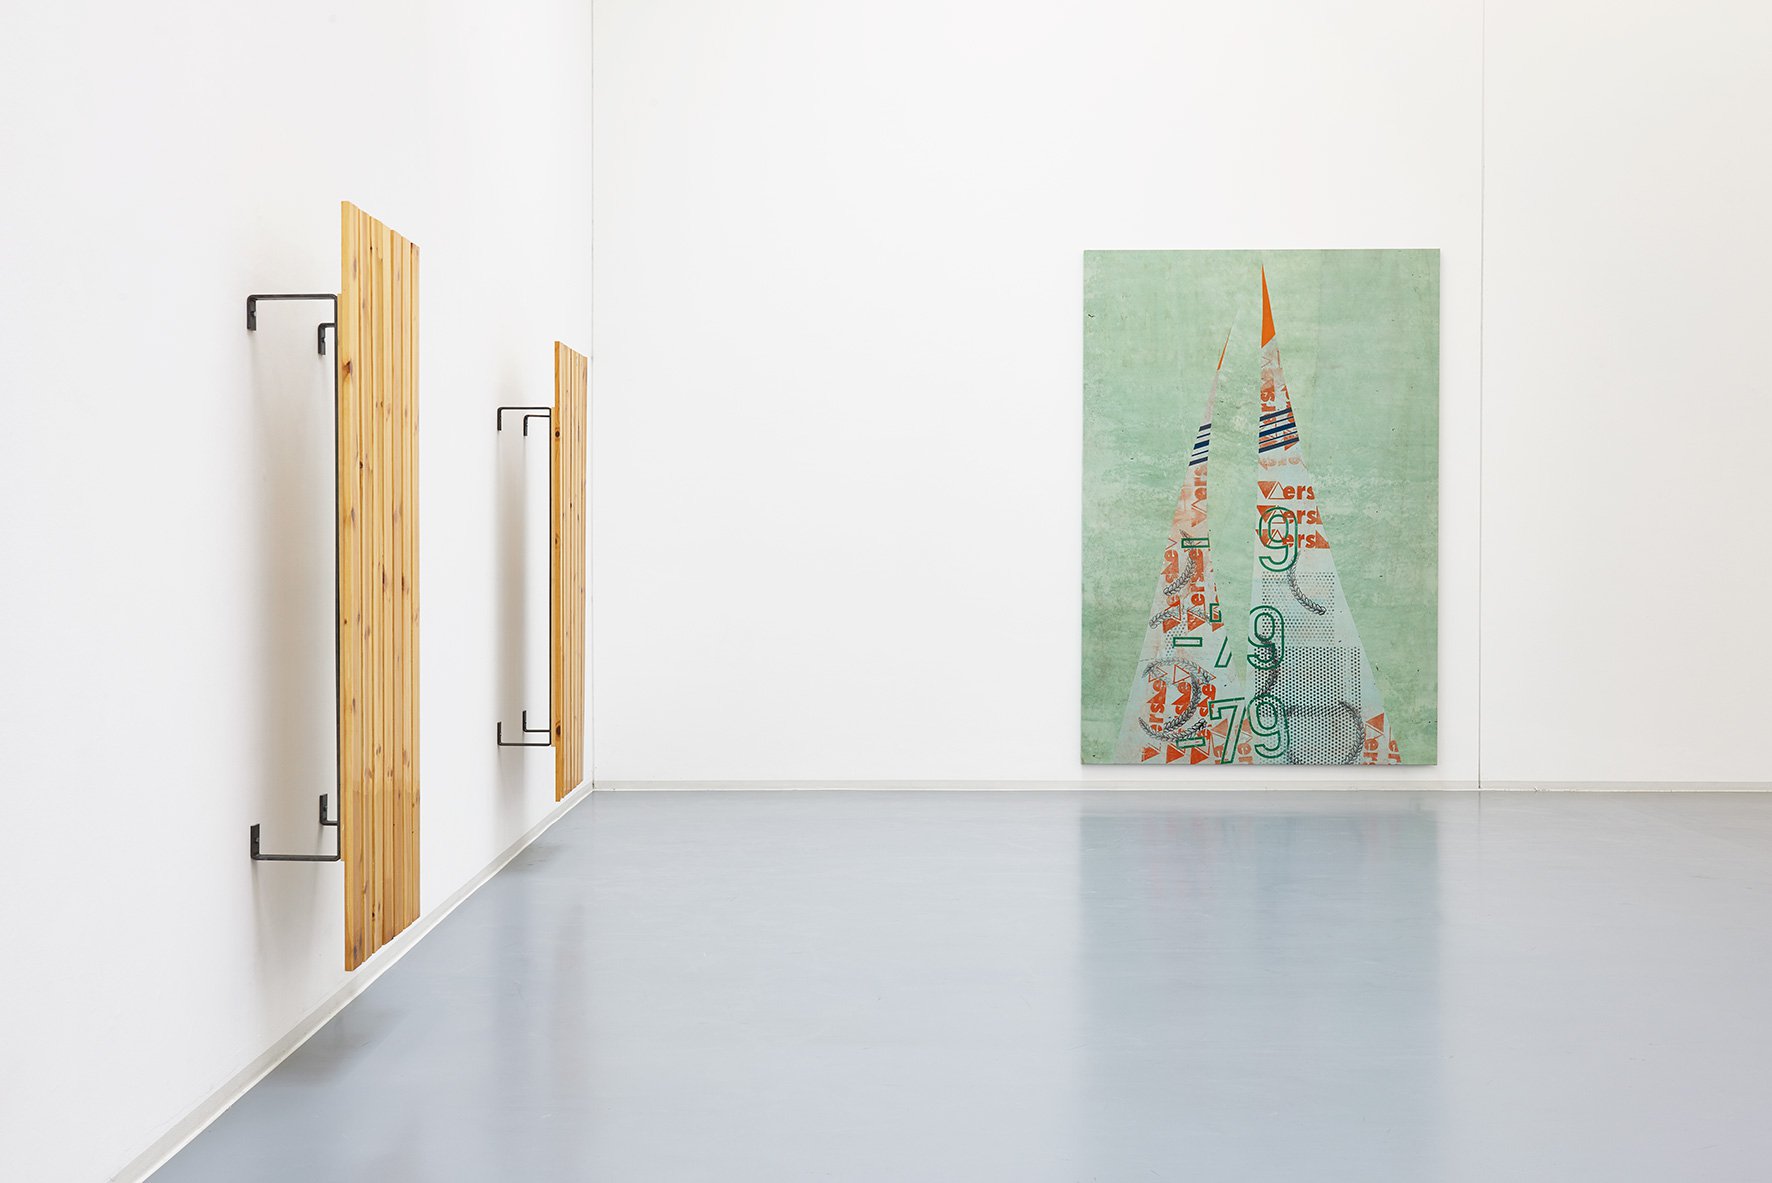 Fredrik Værslev, TAN LINES, installation view, Bonner Kunstverein, 2018. Photo: Mareike Tocha